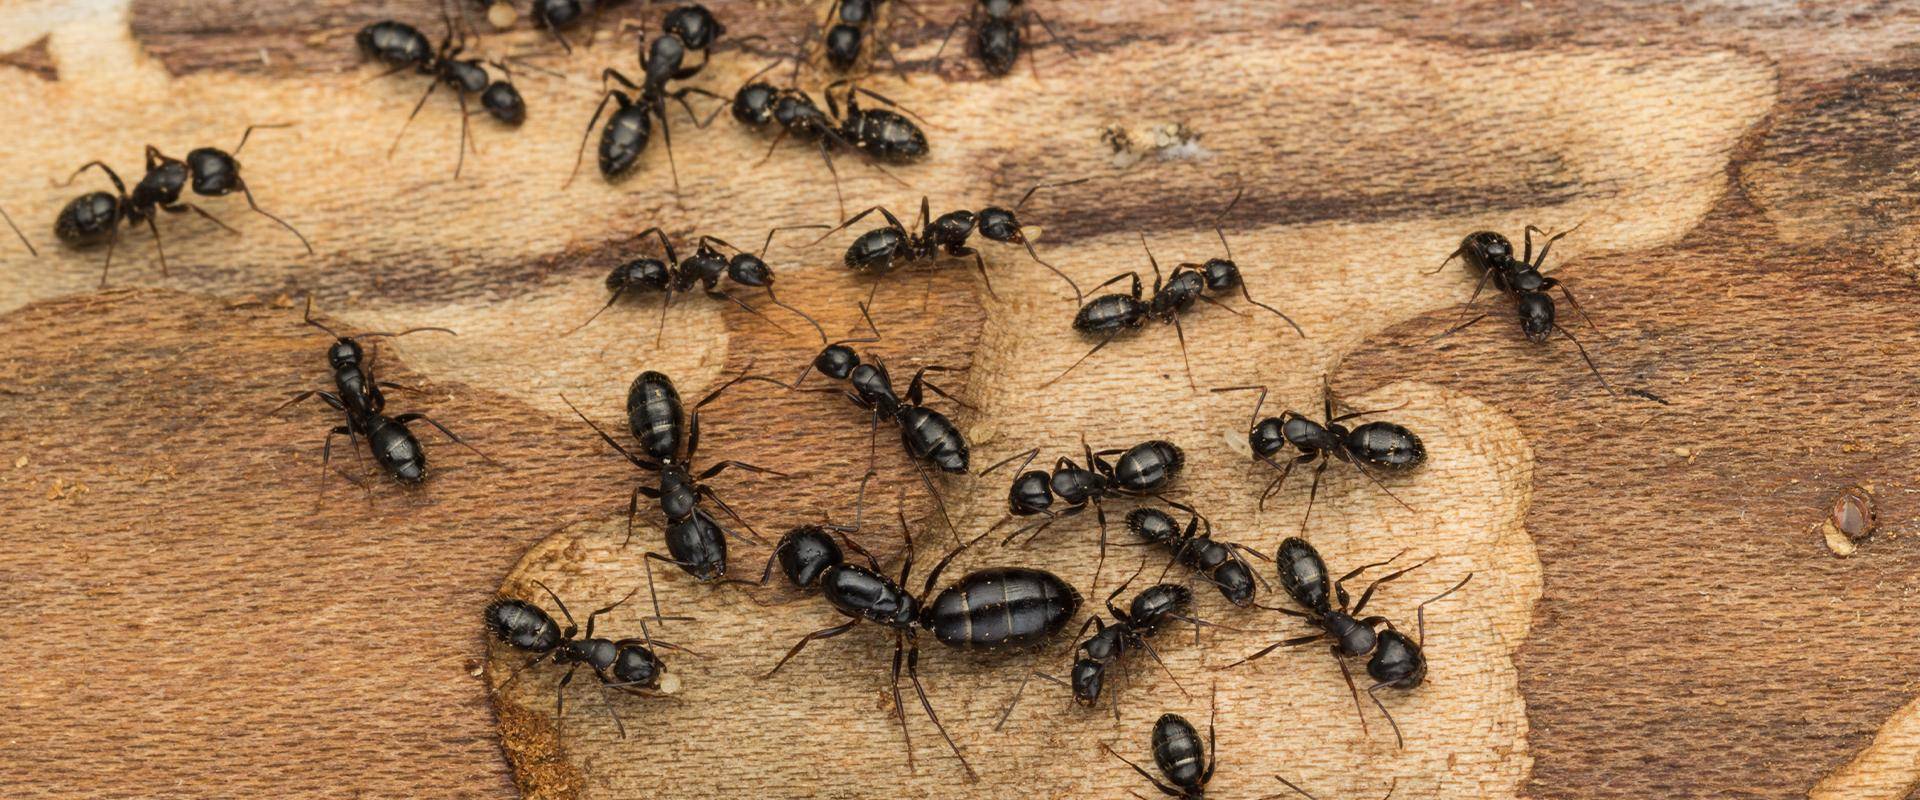 ants on a log in idaho falls